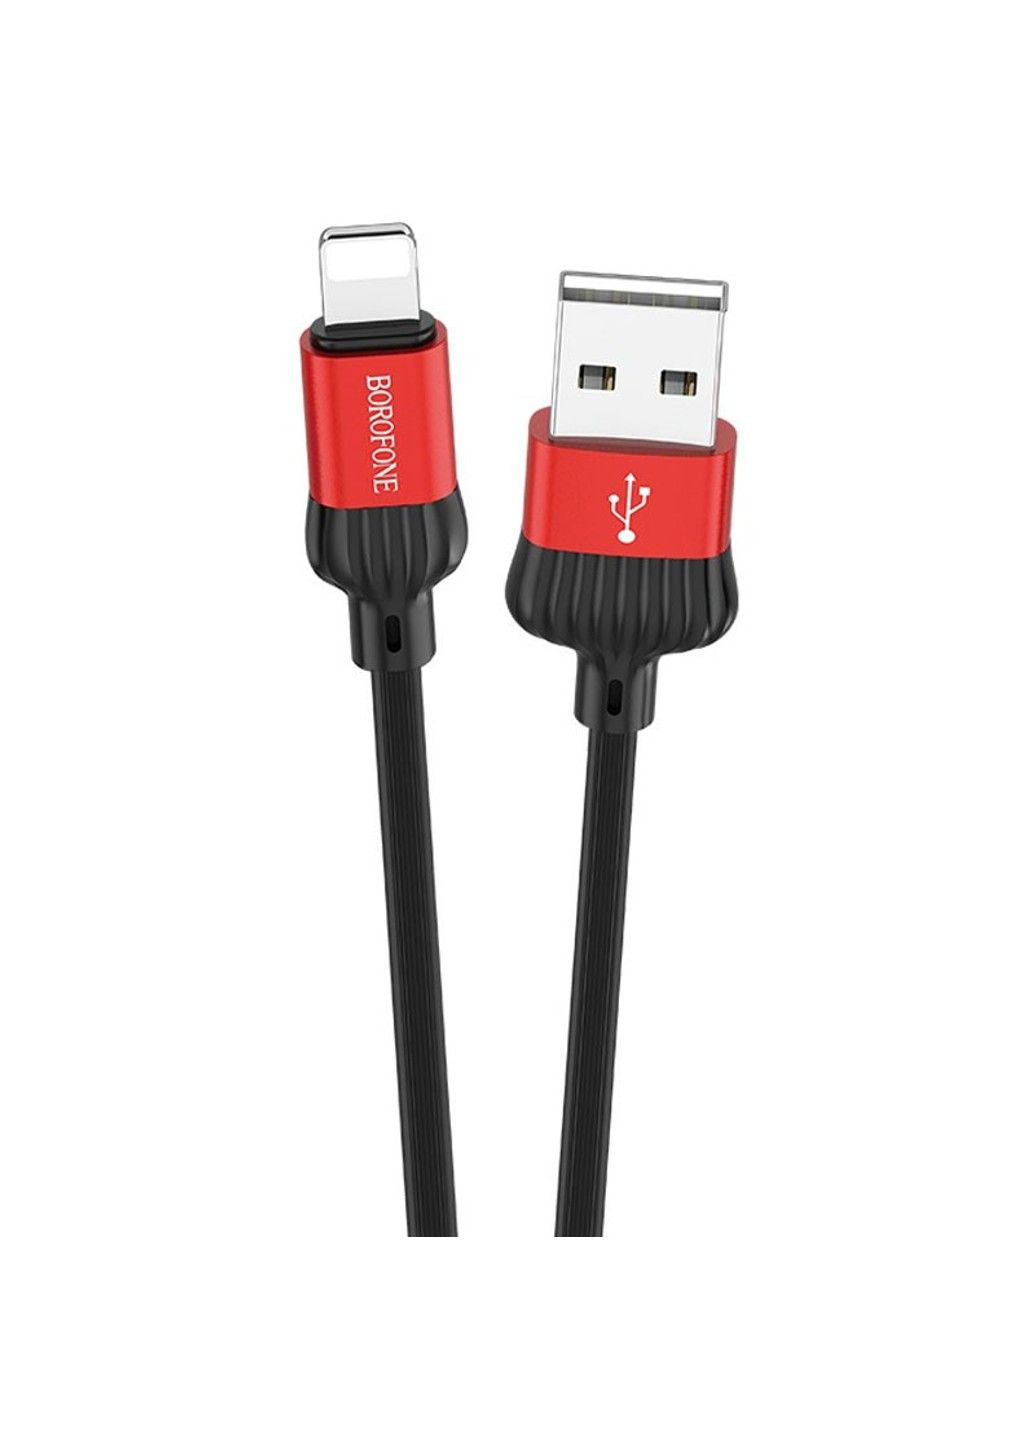 Дата кабель BX28 Dignity USB to Lightning (1m) Borofone (291880047)